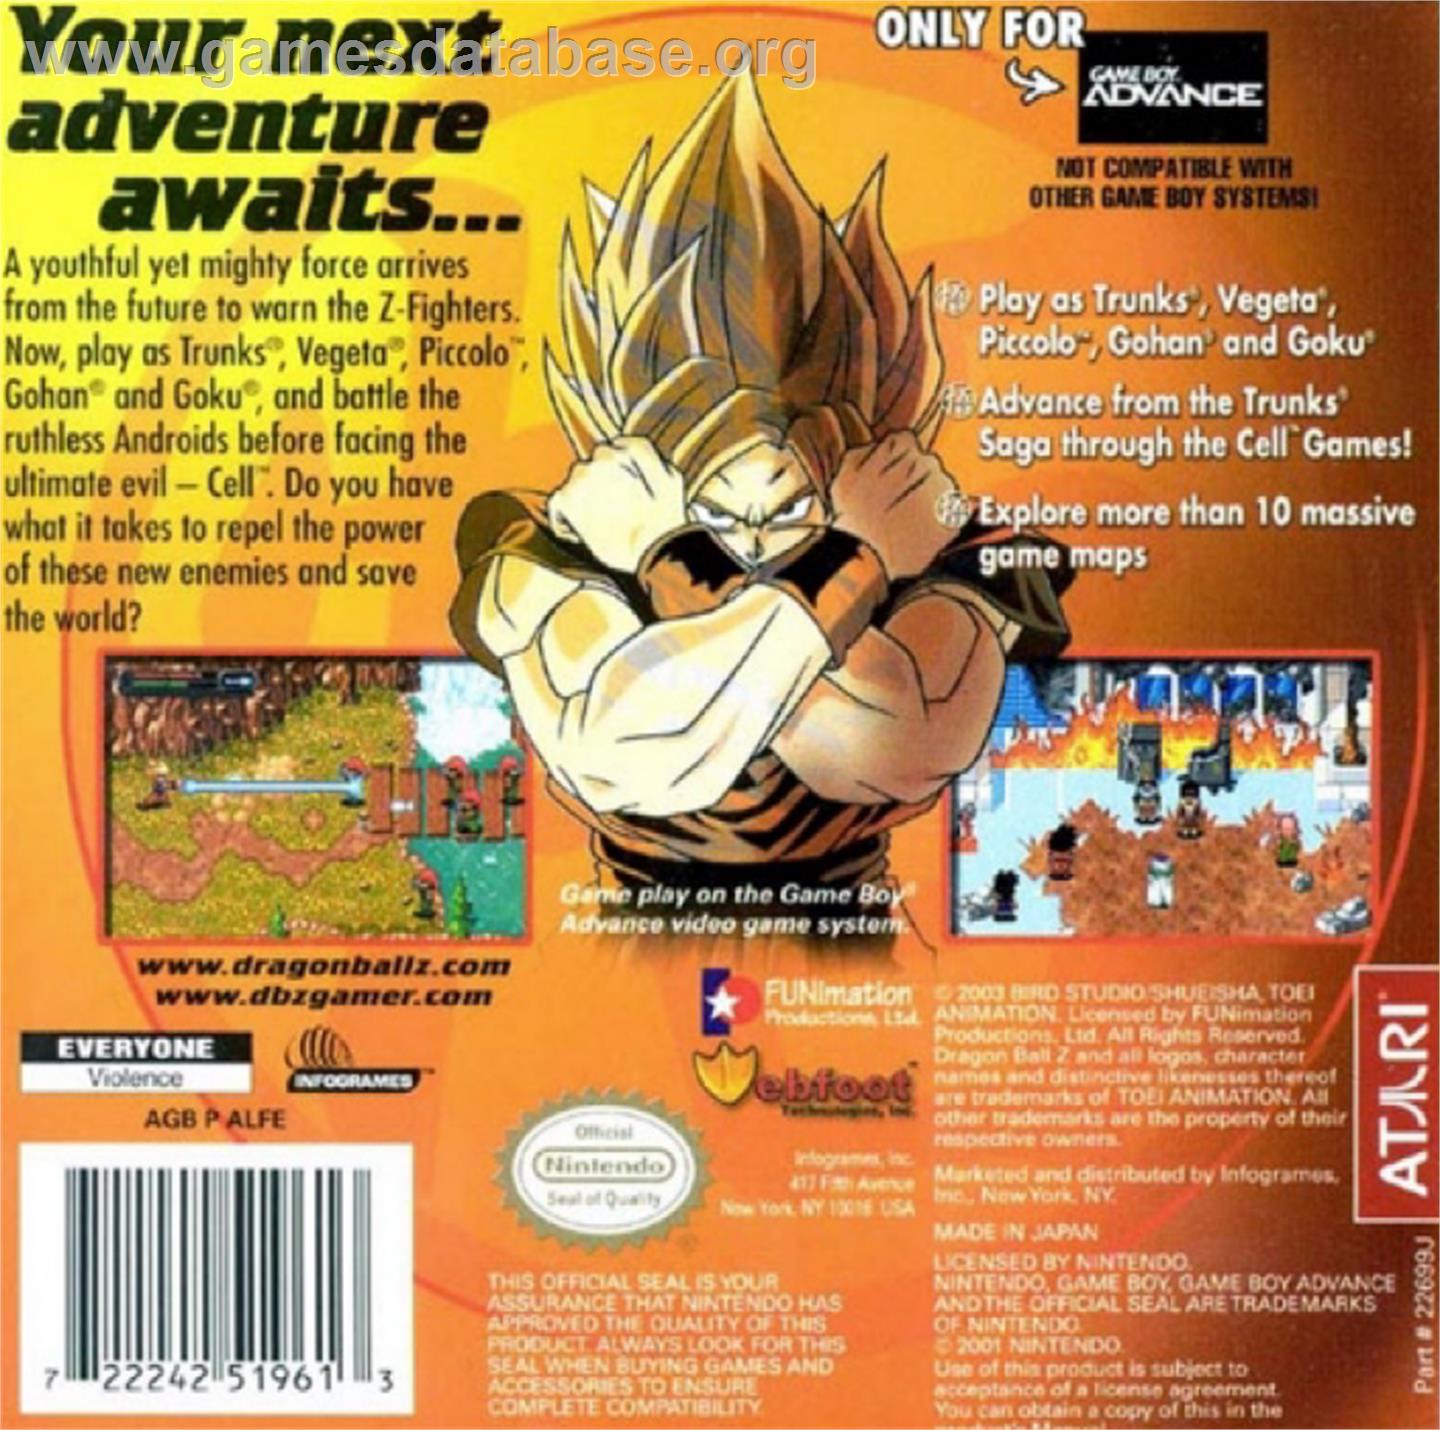 Dragonball Z: Legacy of Goku 2 - Nintendo Game Boy Advance - Artwork - Box Back